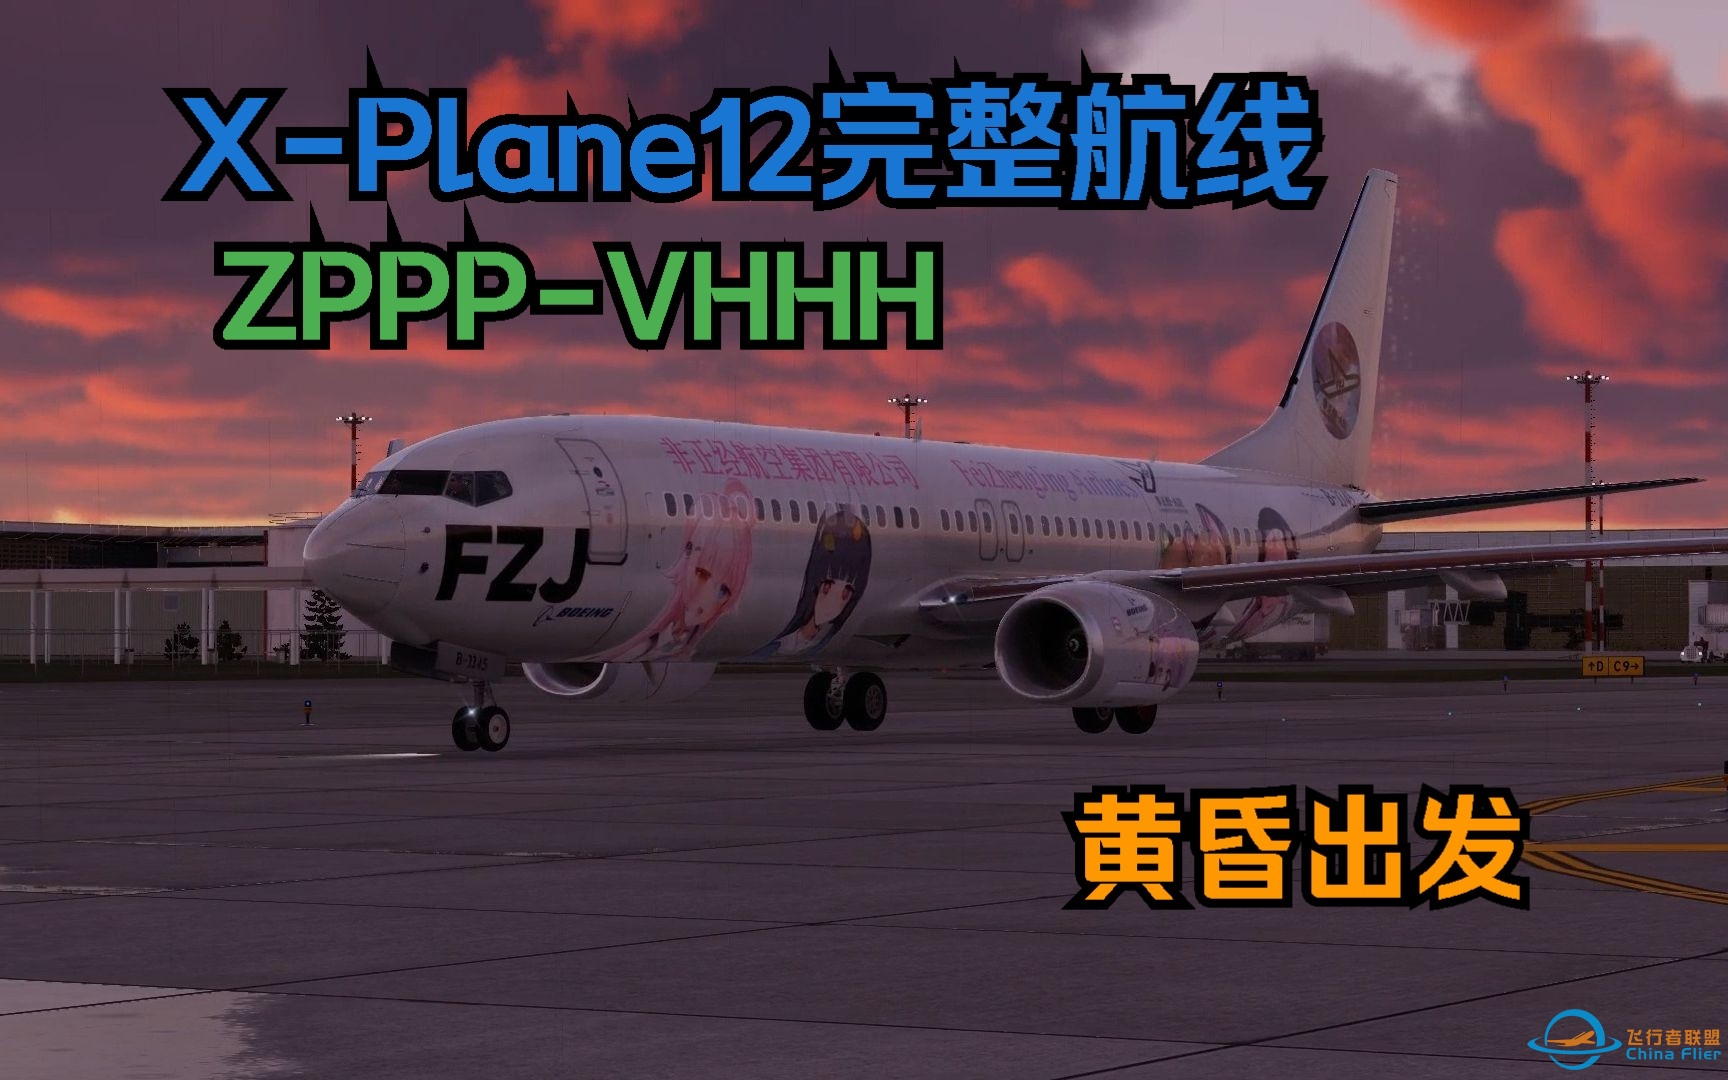 XPlane12完整航线：昆明-香港，欣赏极致夜景-6323 